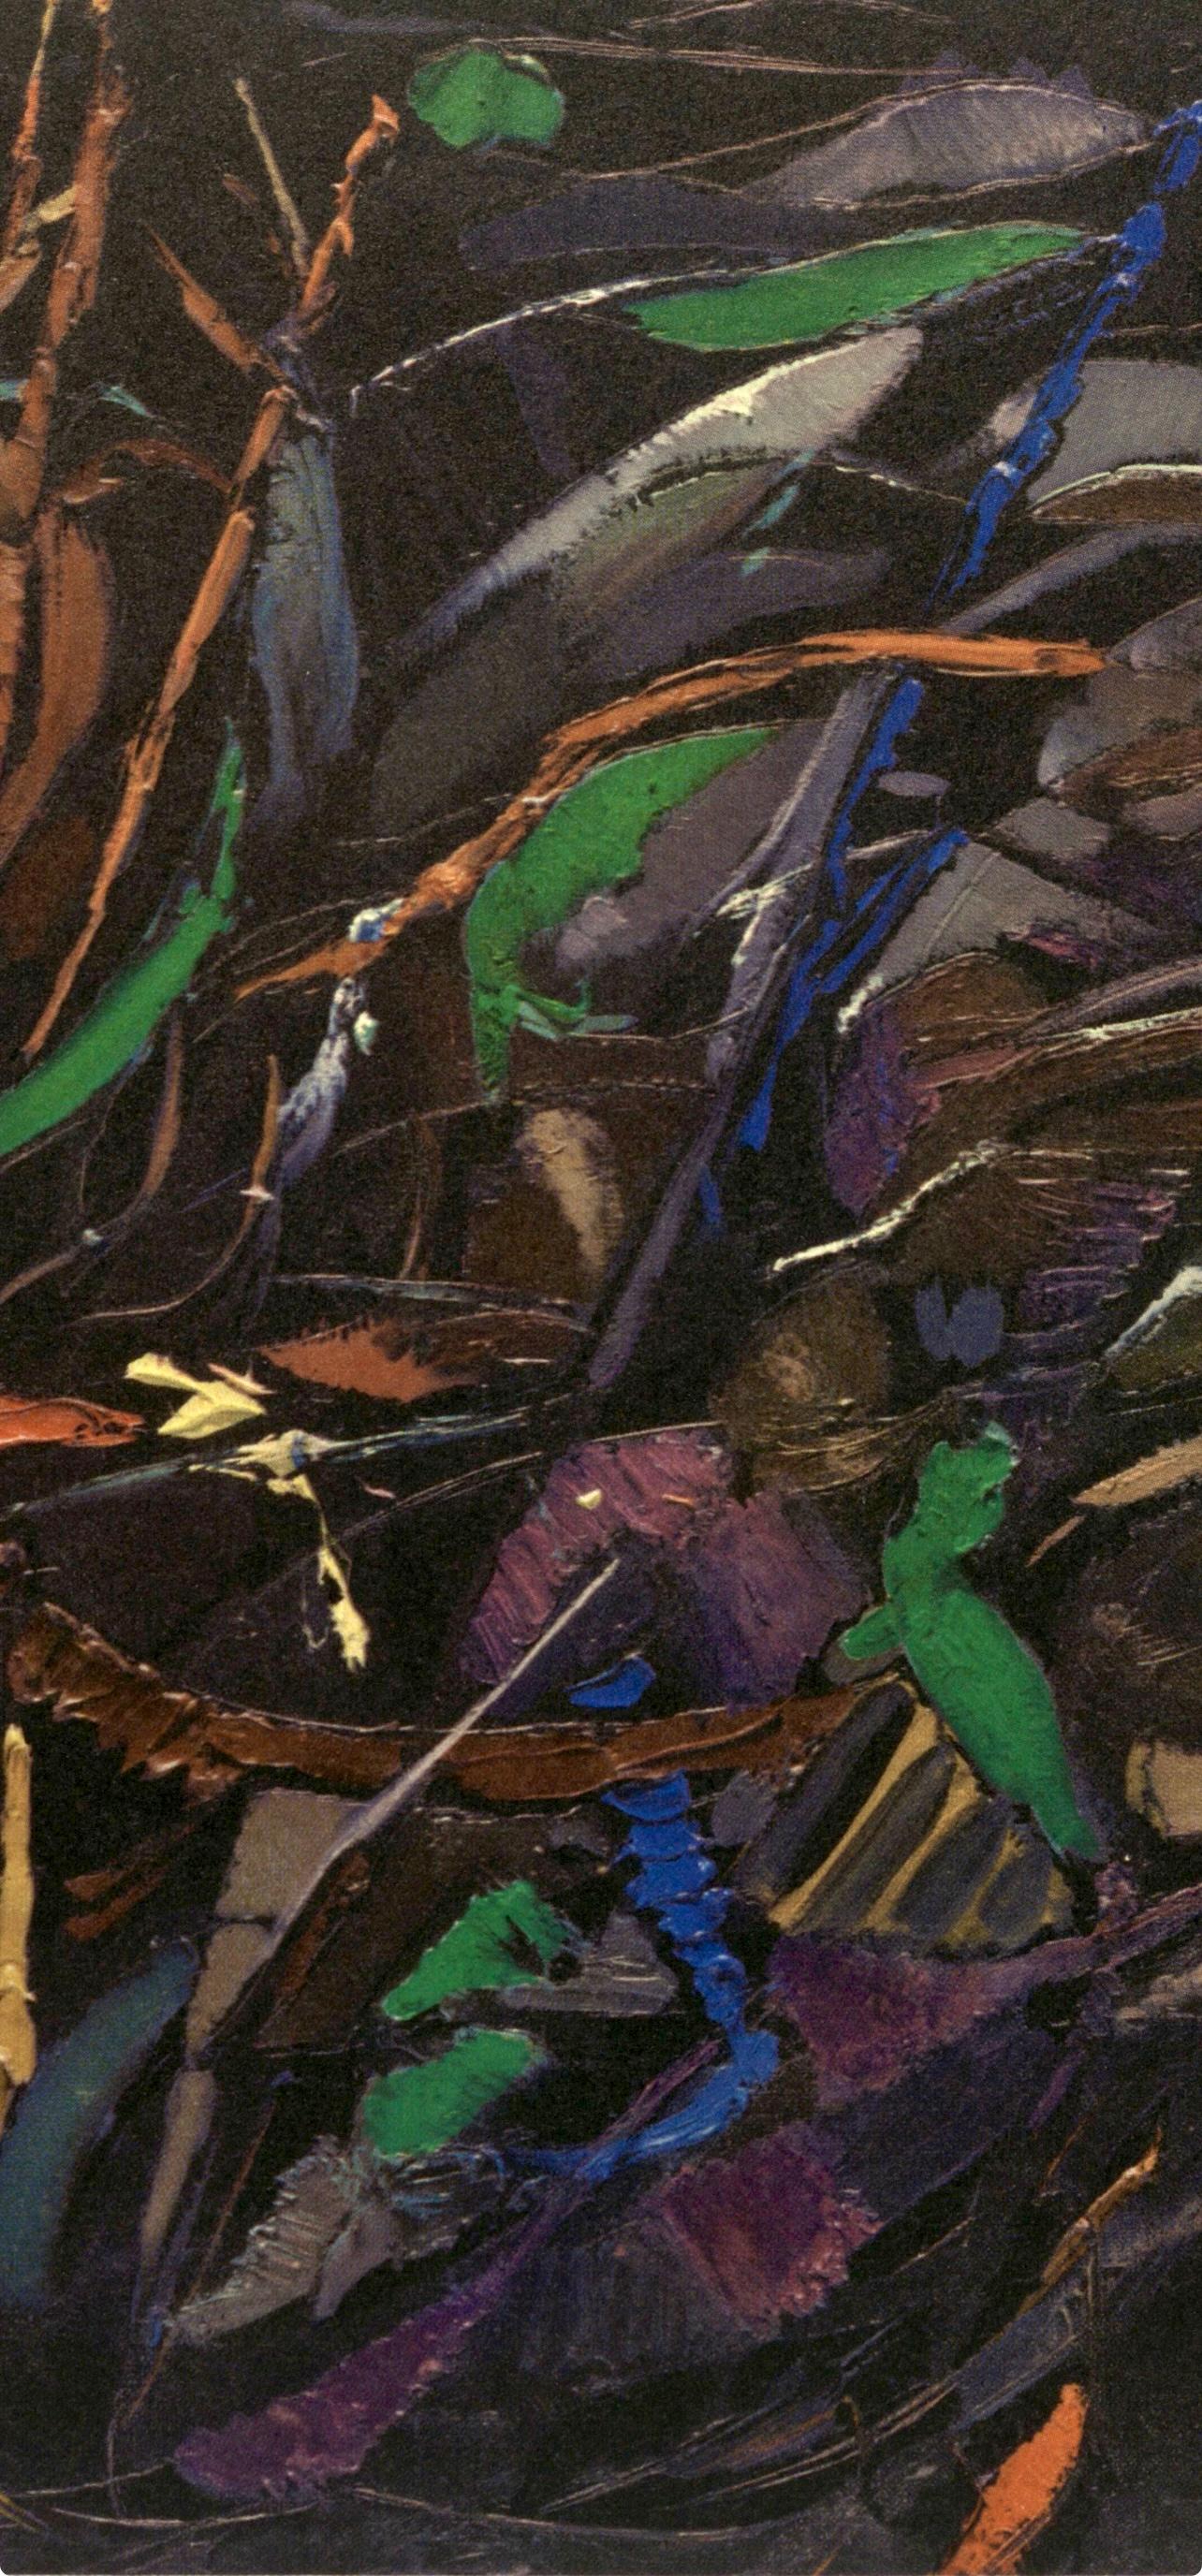 Lanskoy, Composition, André Lanskoy: Peintres d'aujourd'hui (after) For Sale 4